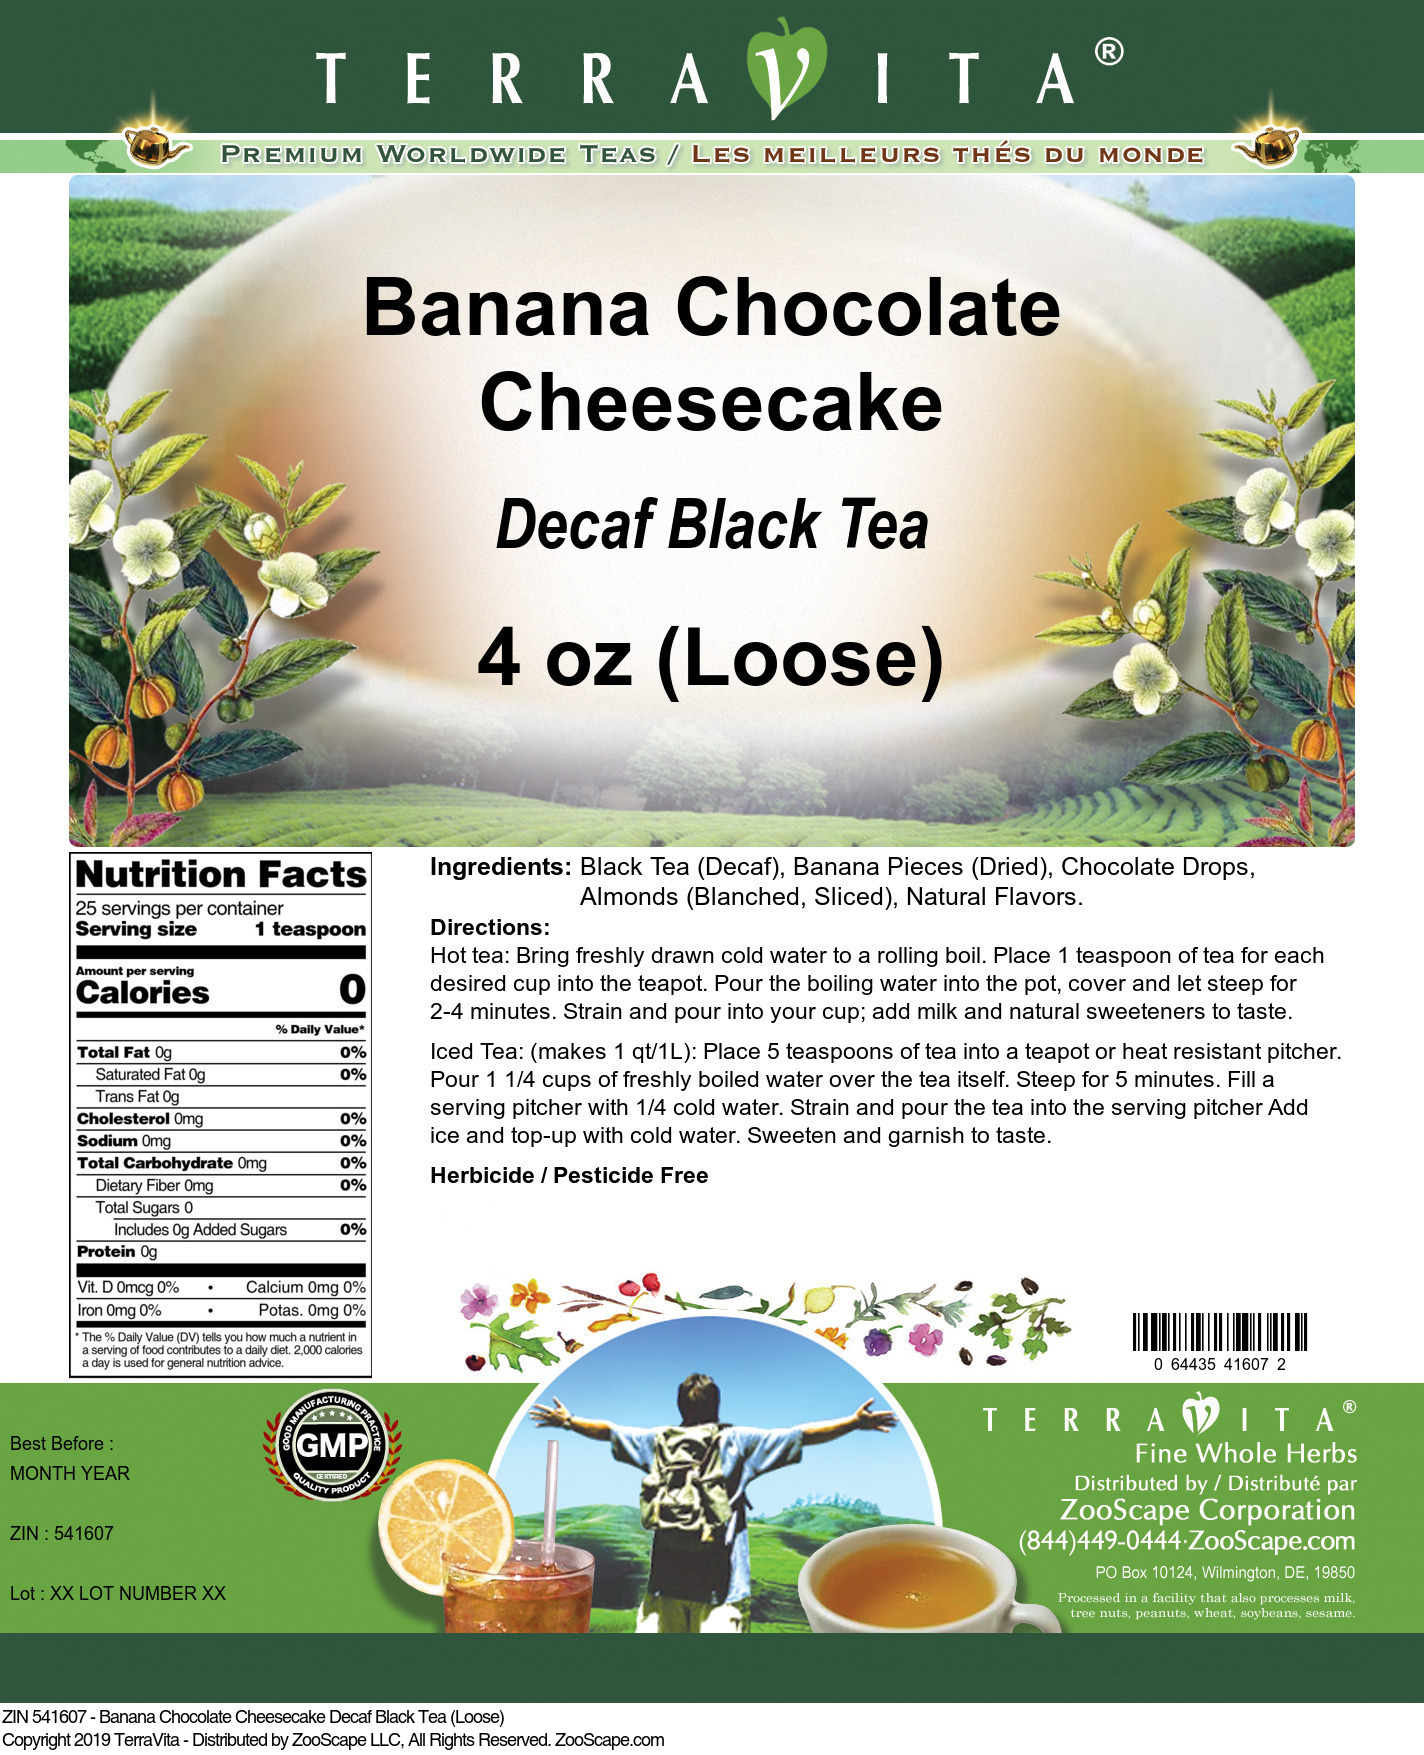 Banana Chocolate Cheesecake Decaf Black Tea (Loose) - Label